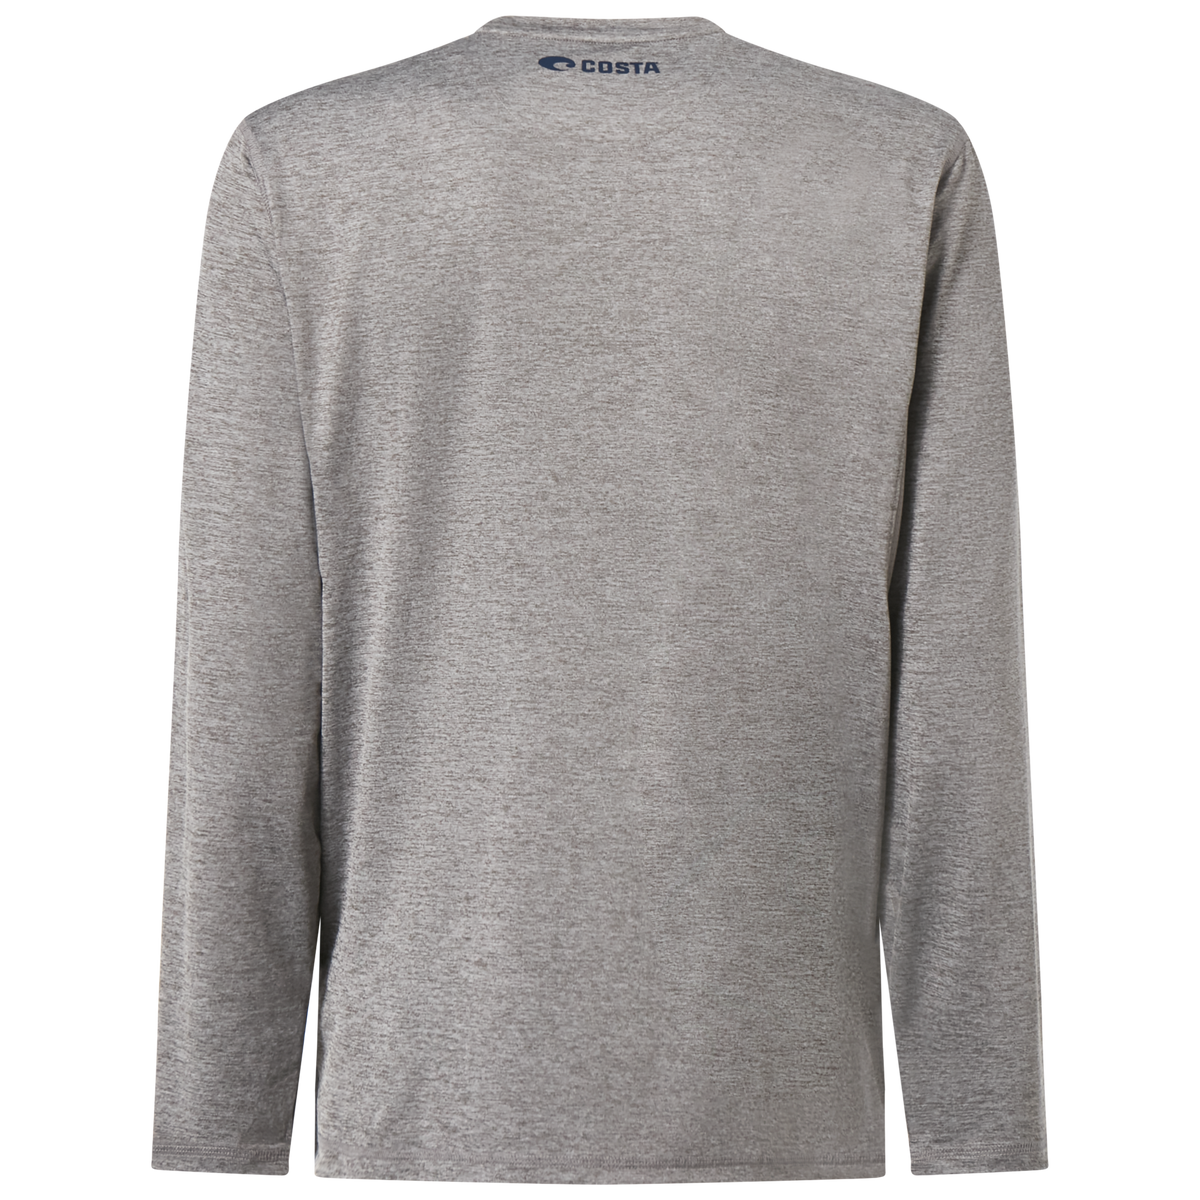 Costa Long Sleeve Voyager Performance Shirt